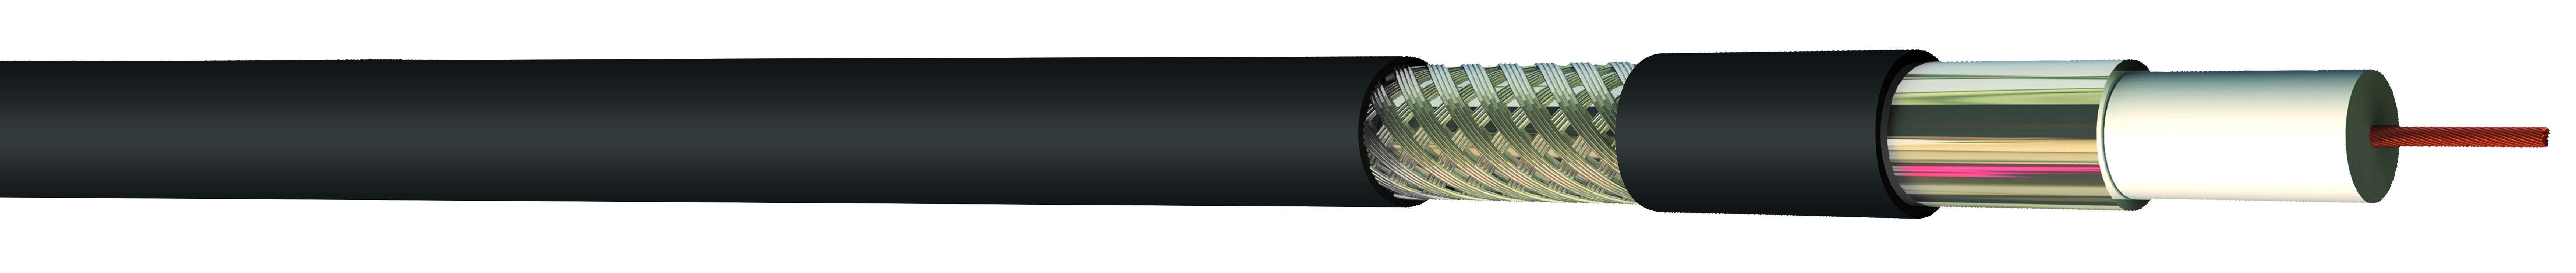 CAE Data - Câble coaxial UHD SDI 4K Diamètre âme souple 7*0.40mm